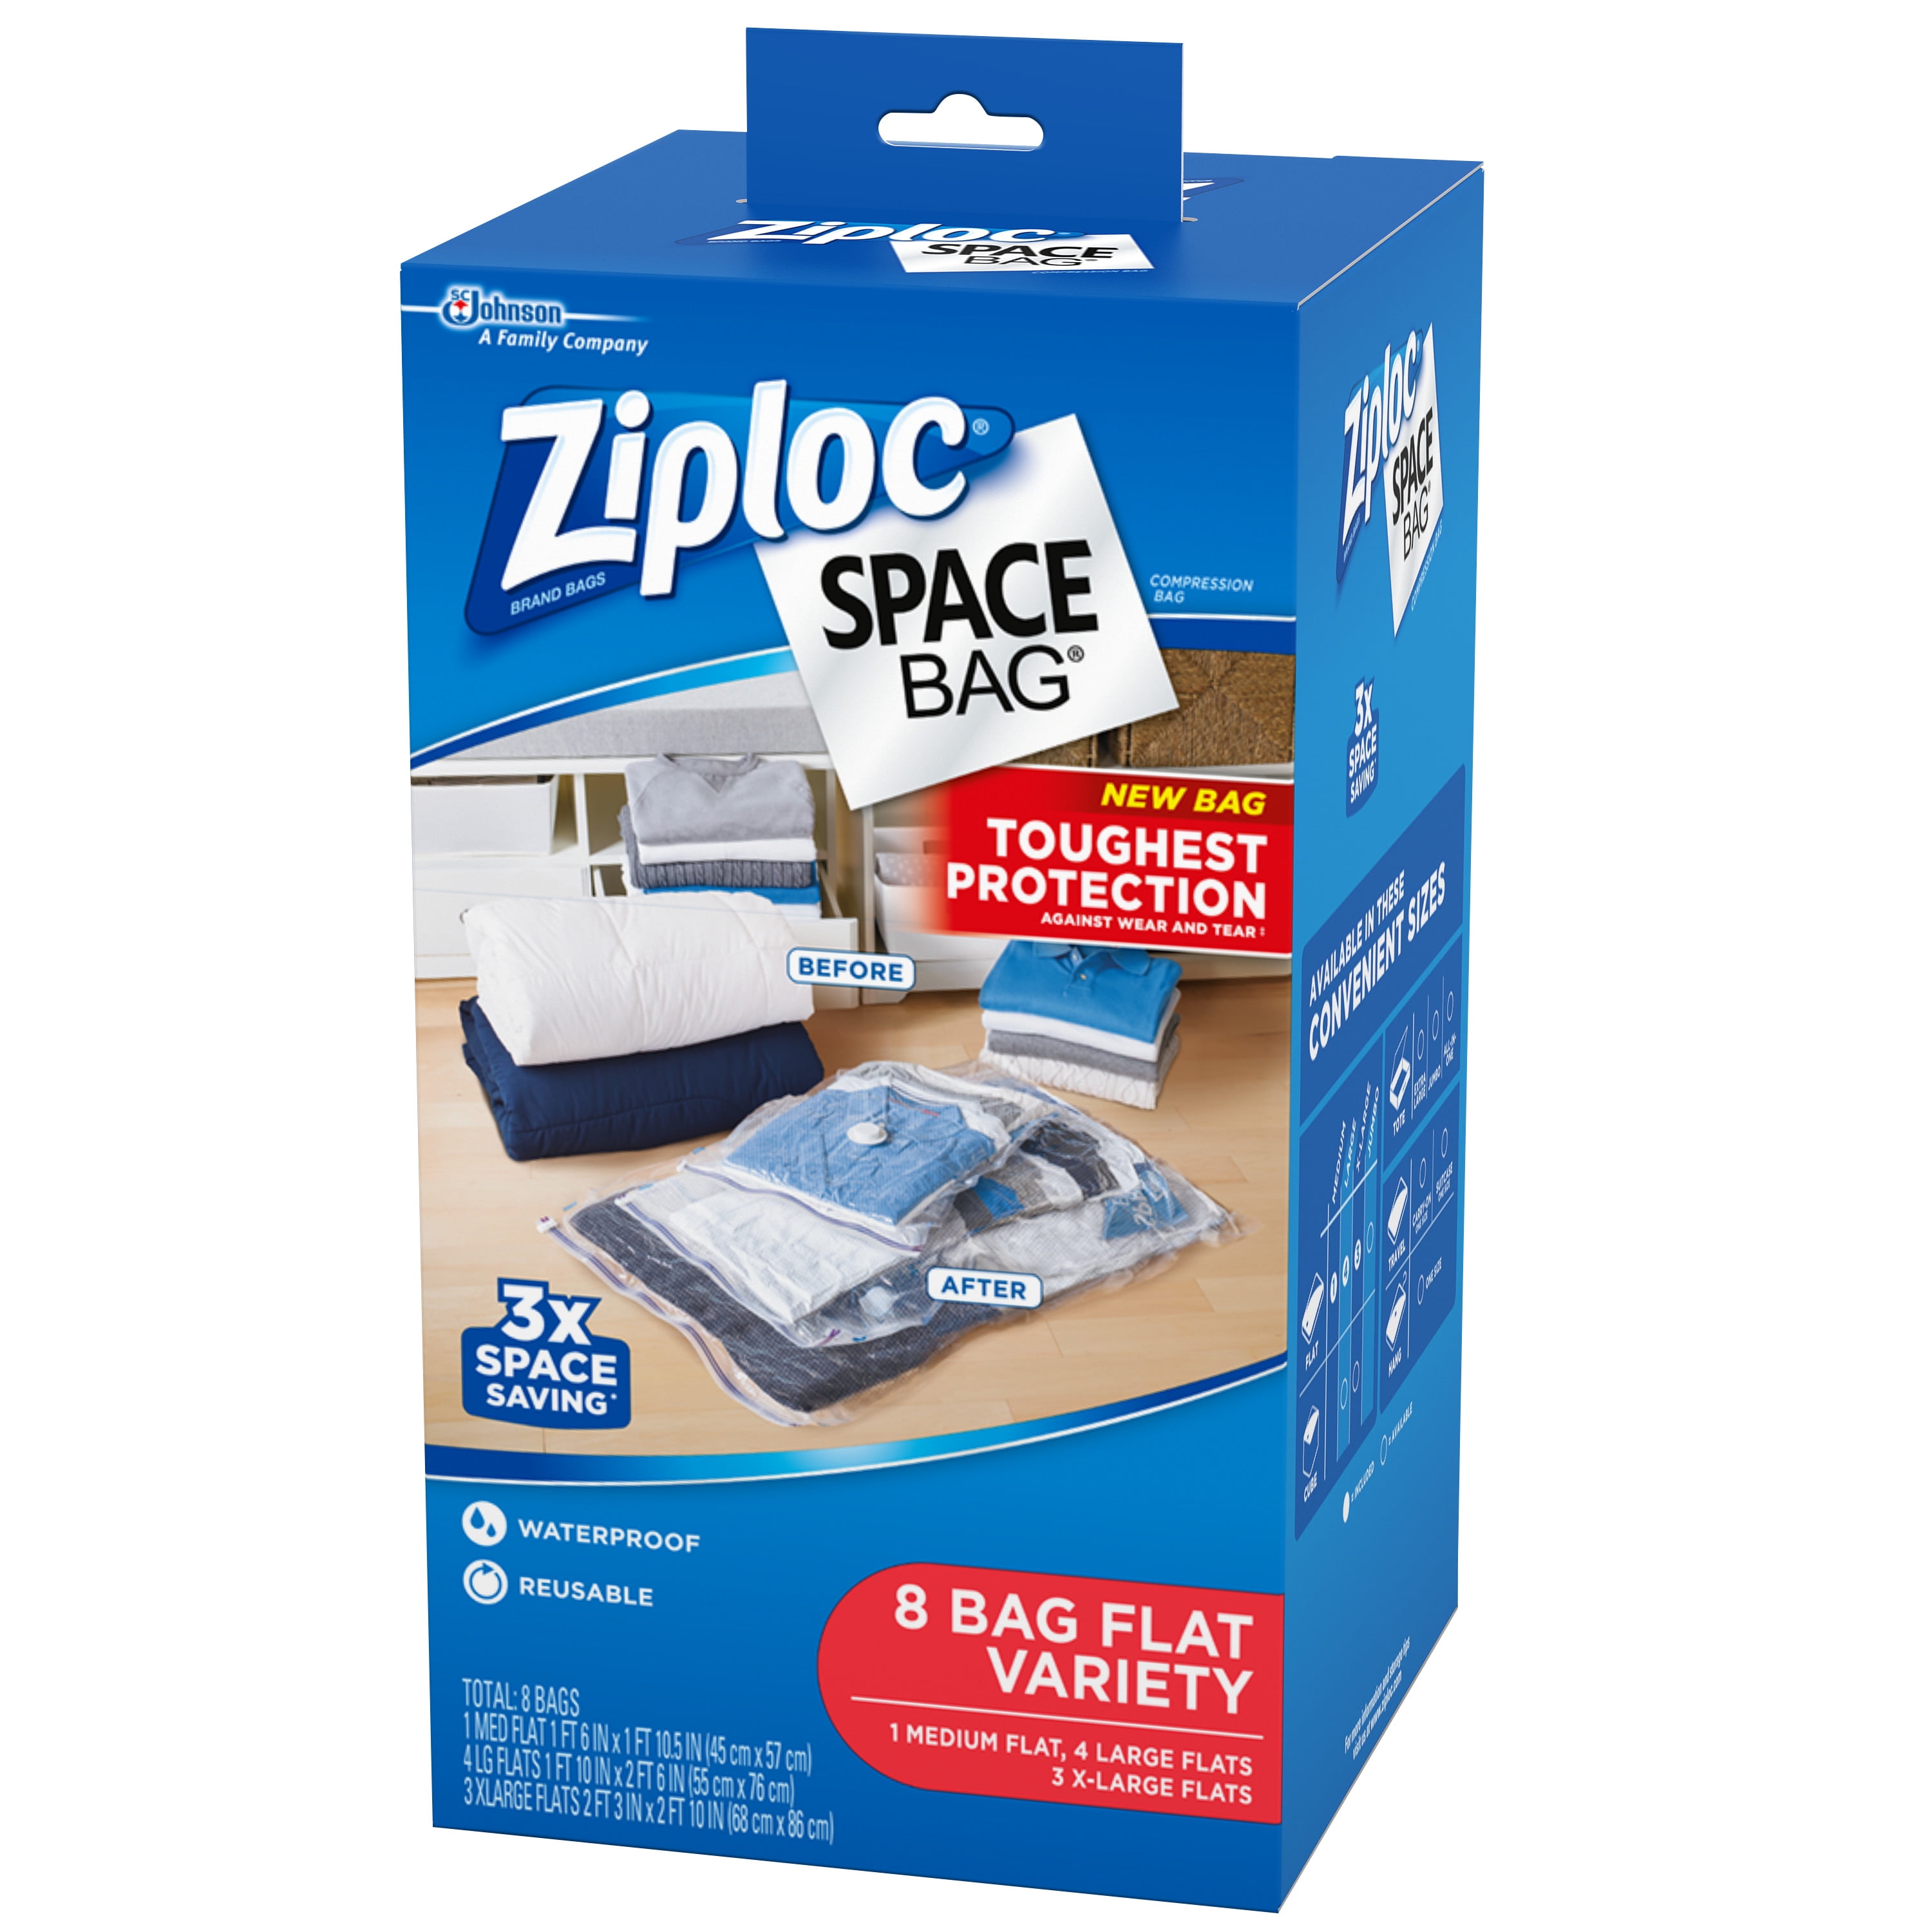 Ziploc Space Bag Variety Pack Flats 8 Count (3 xl, 4L, 1M) 